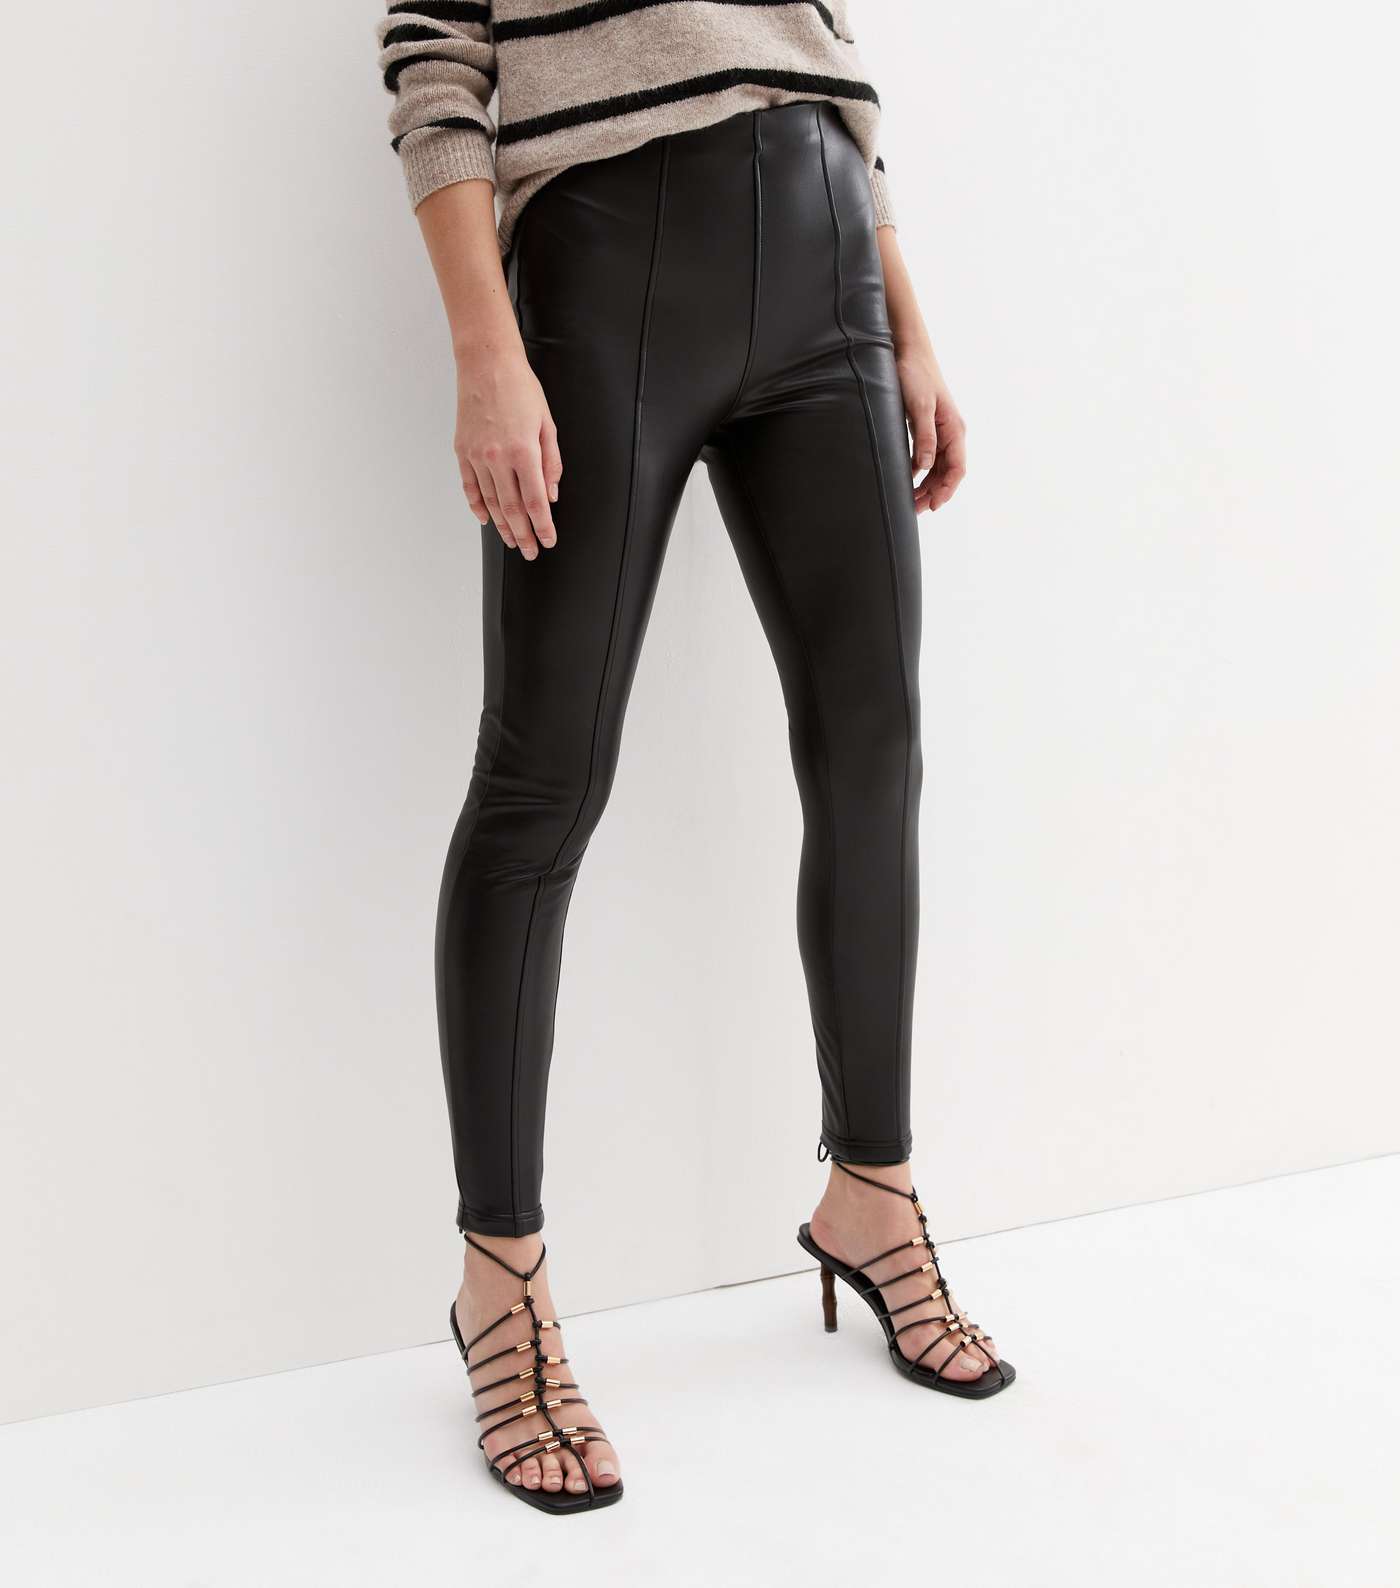 Black Leather-Look High Waist Leggings Image 2